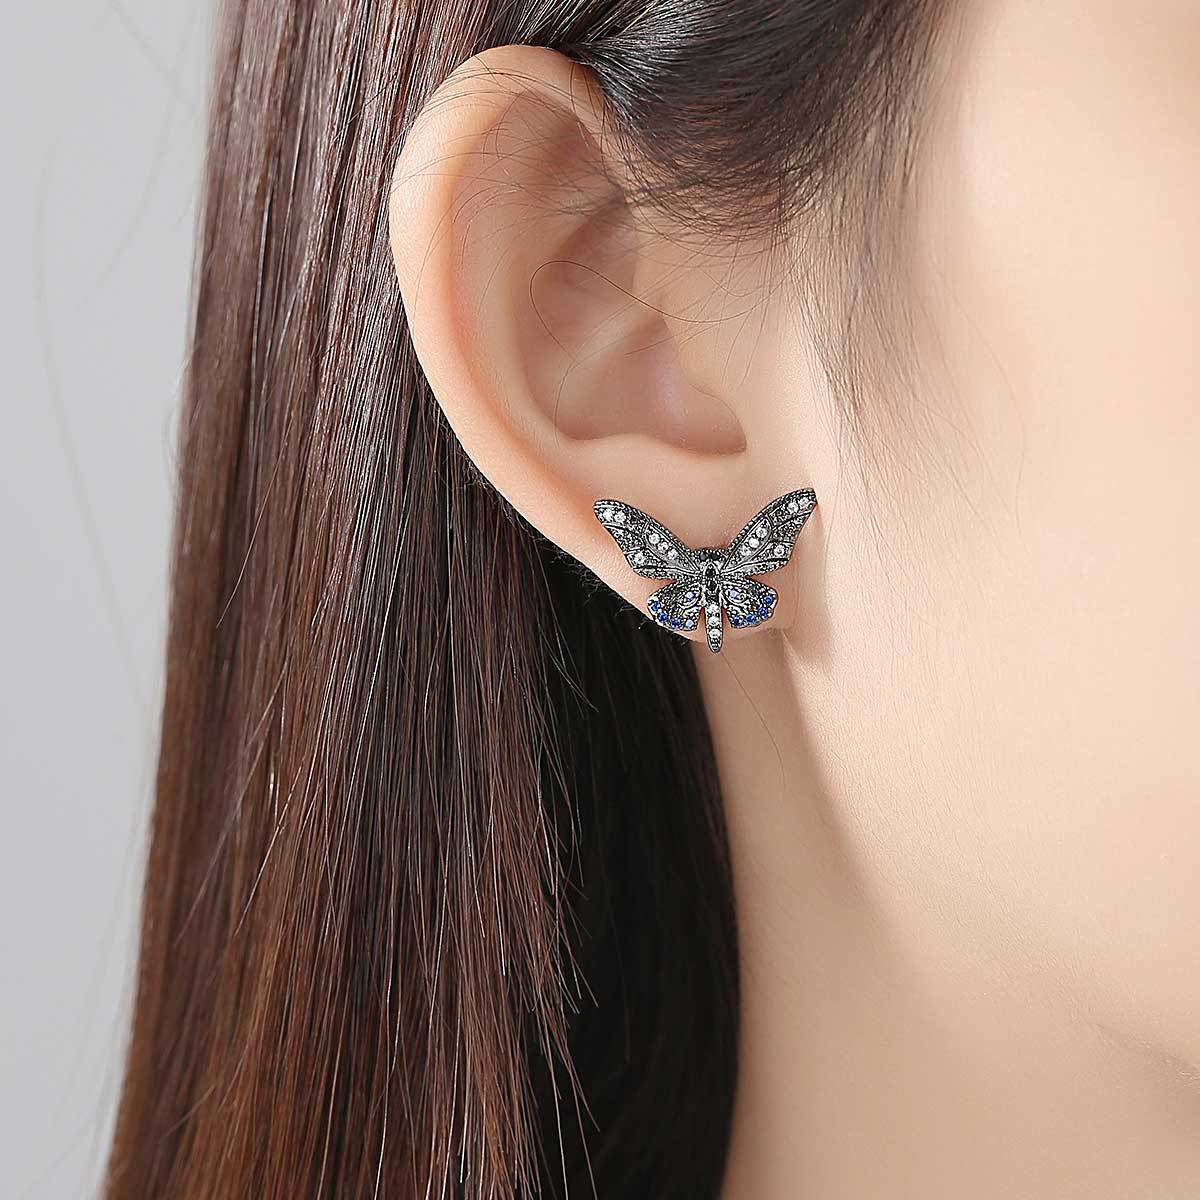 Black Cubic Zirconia & Rhodium-Plated Butterfly Stud Earrings